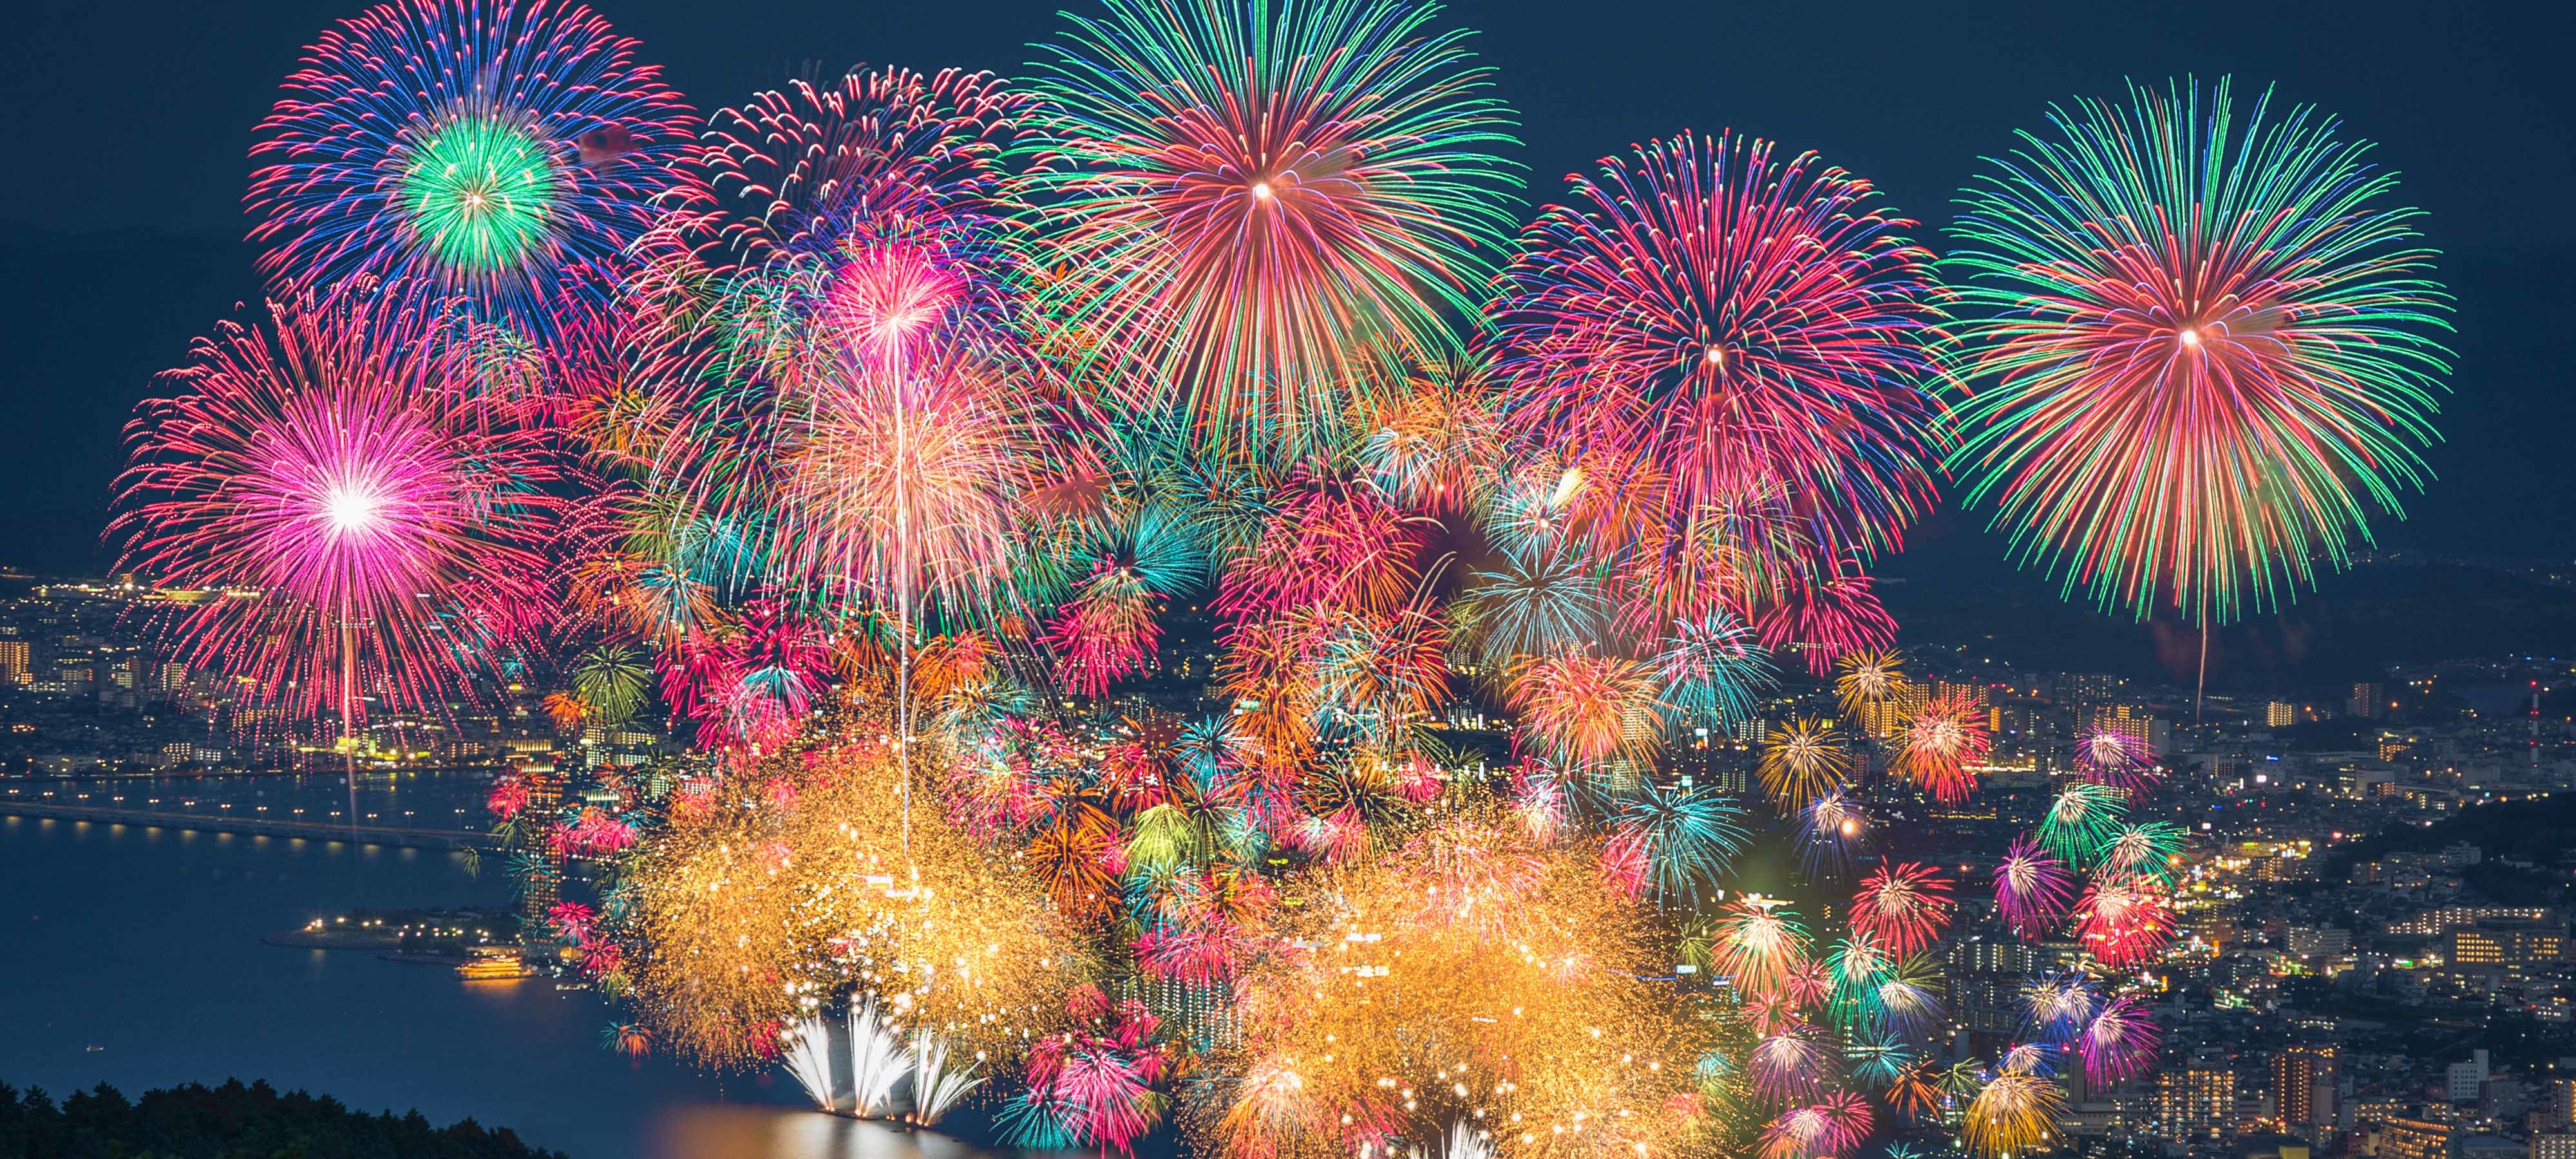 amazing fireworks display